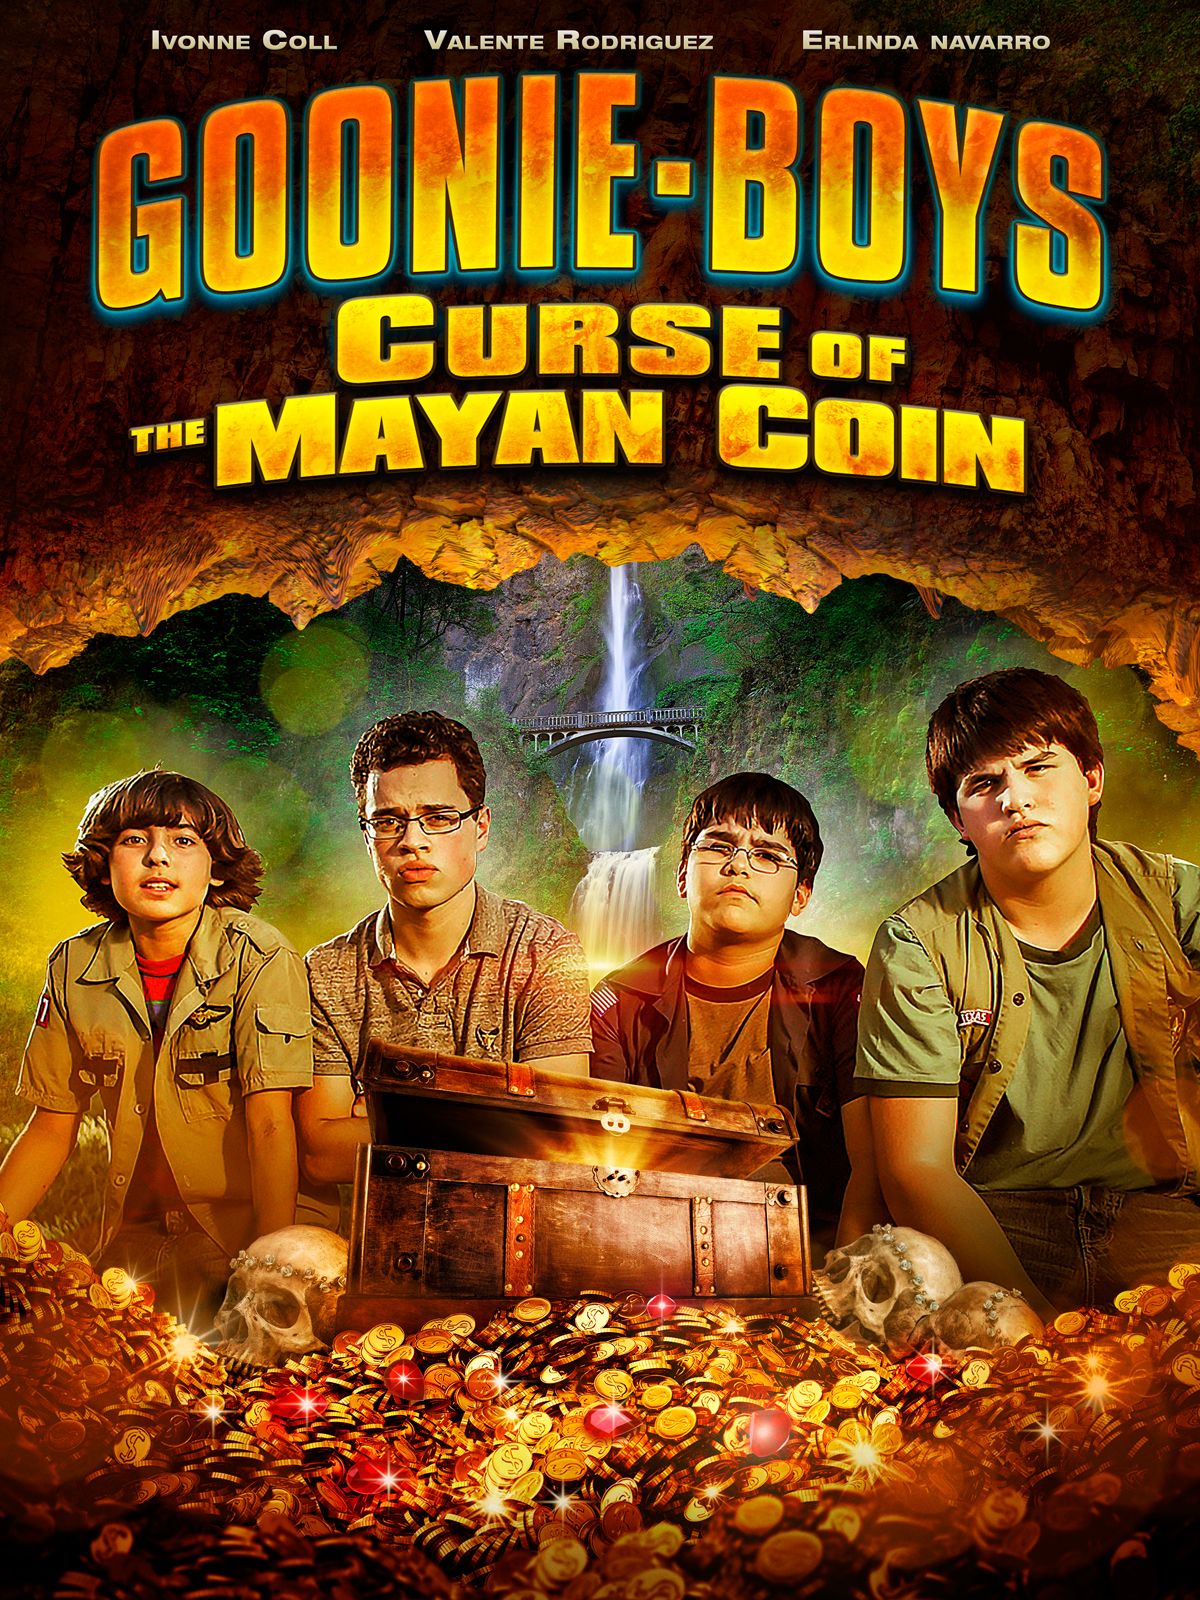 Keyart for the movie Goonie-Boys: Curse of the Mayan Coin